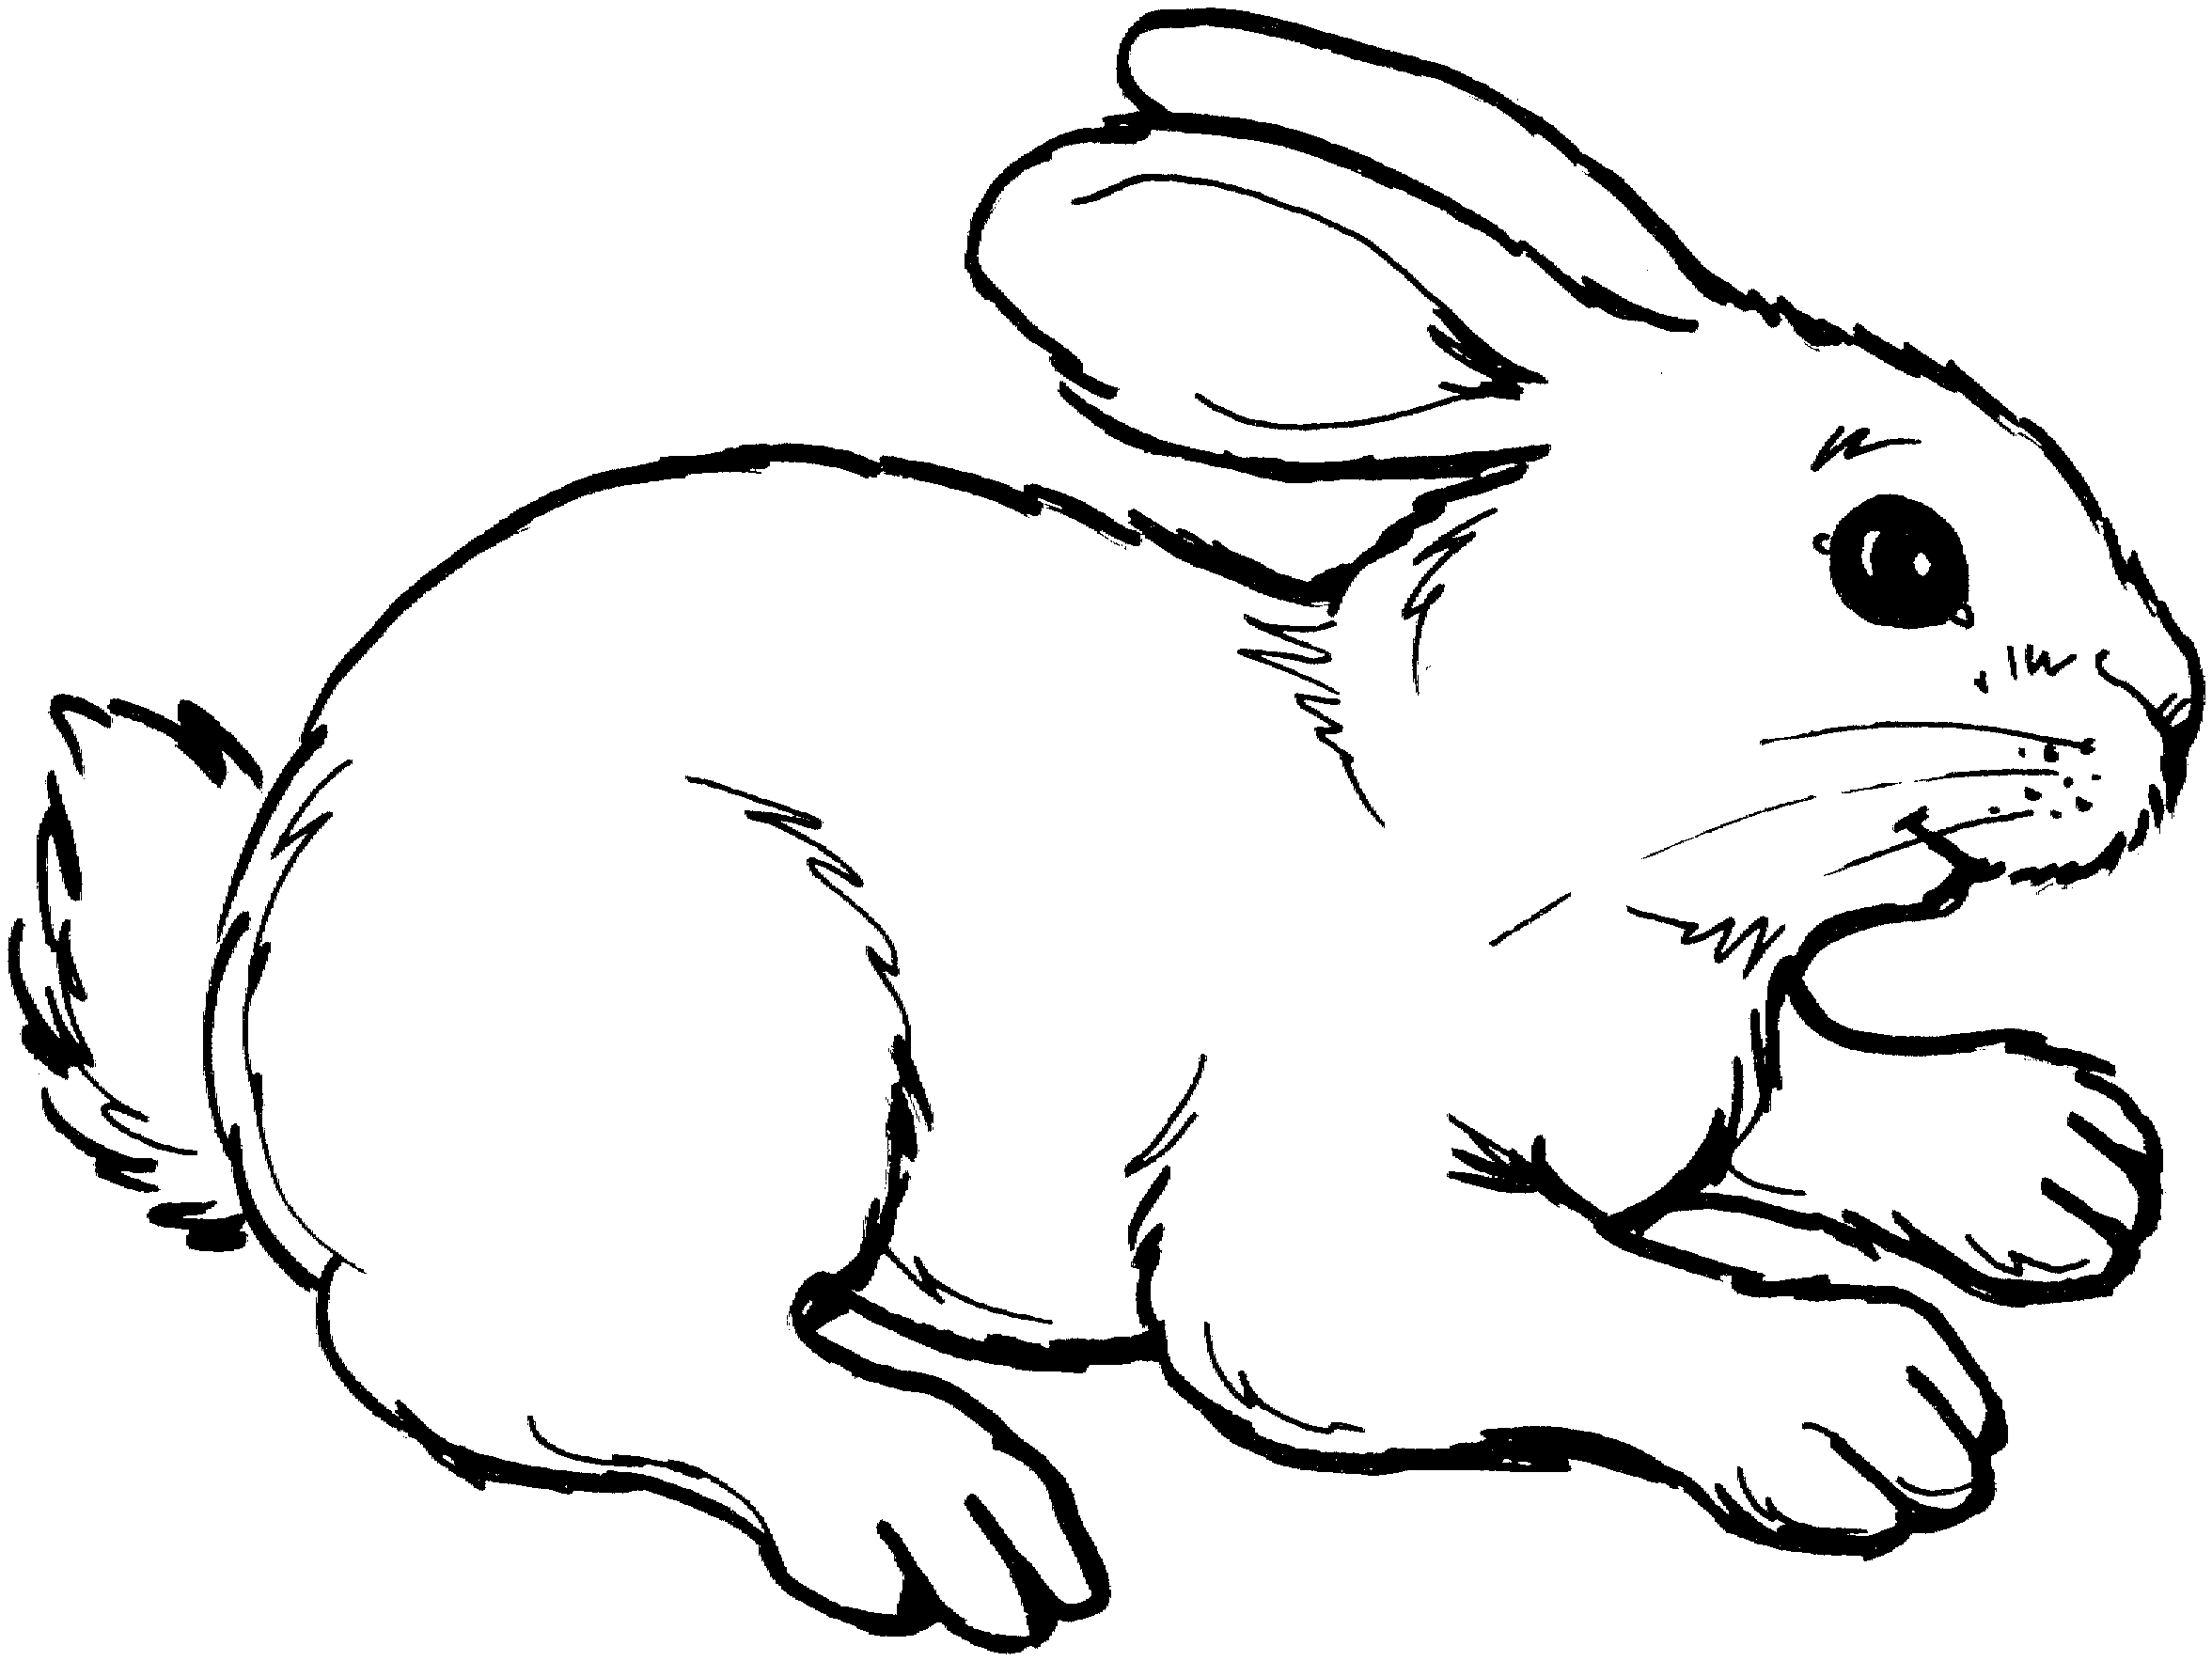 Bunny black and white rabbit clipart clipartix 2